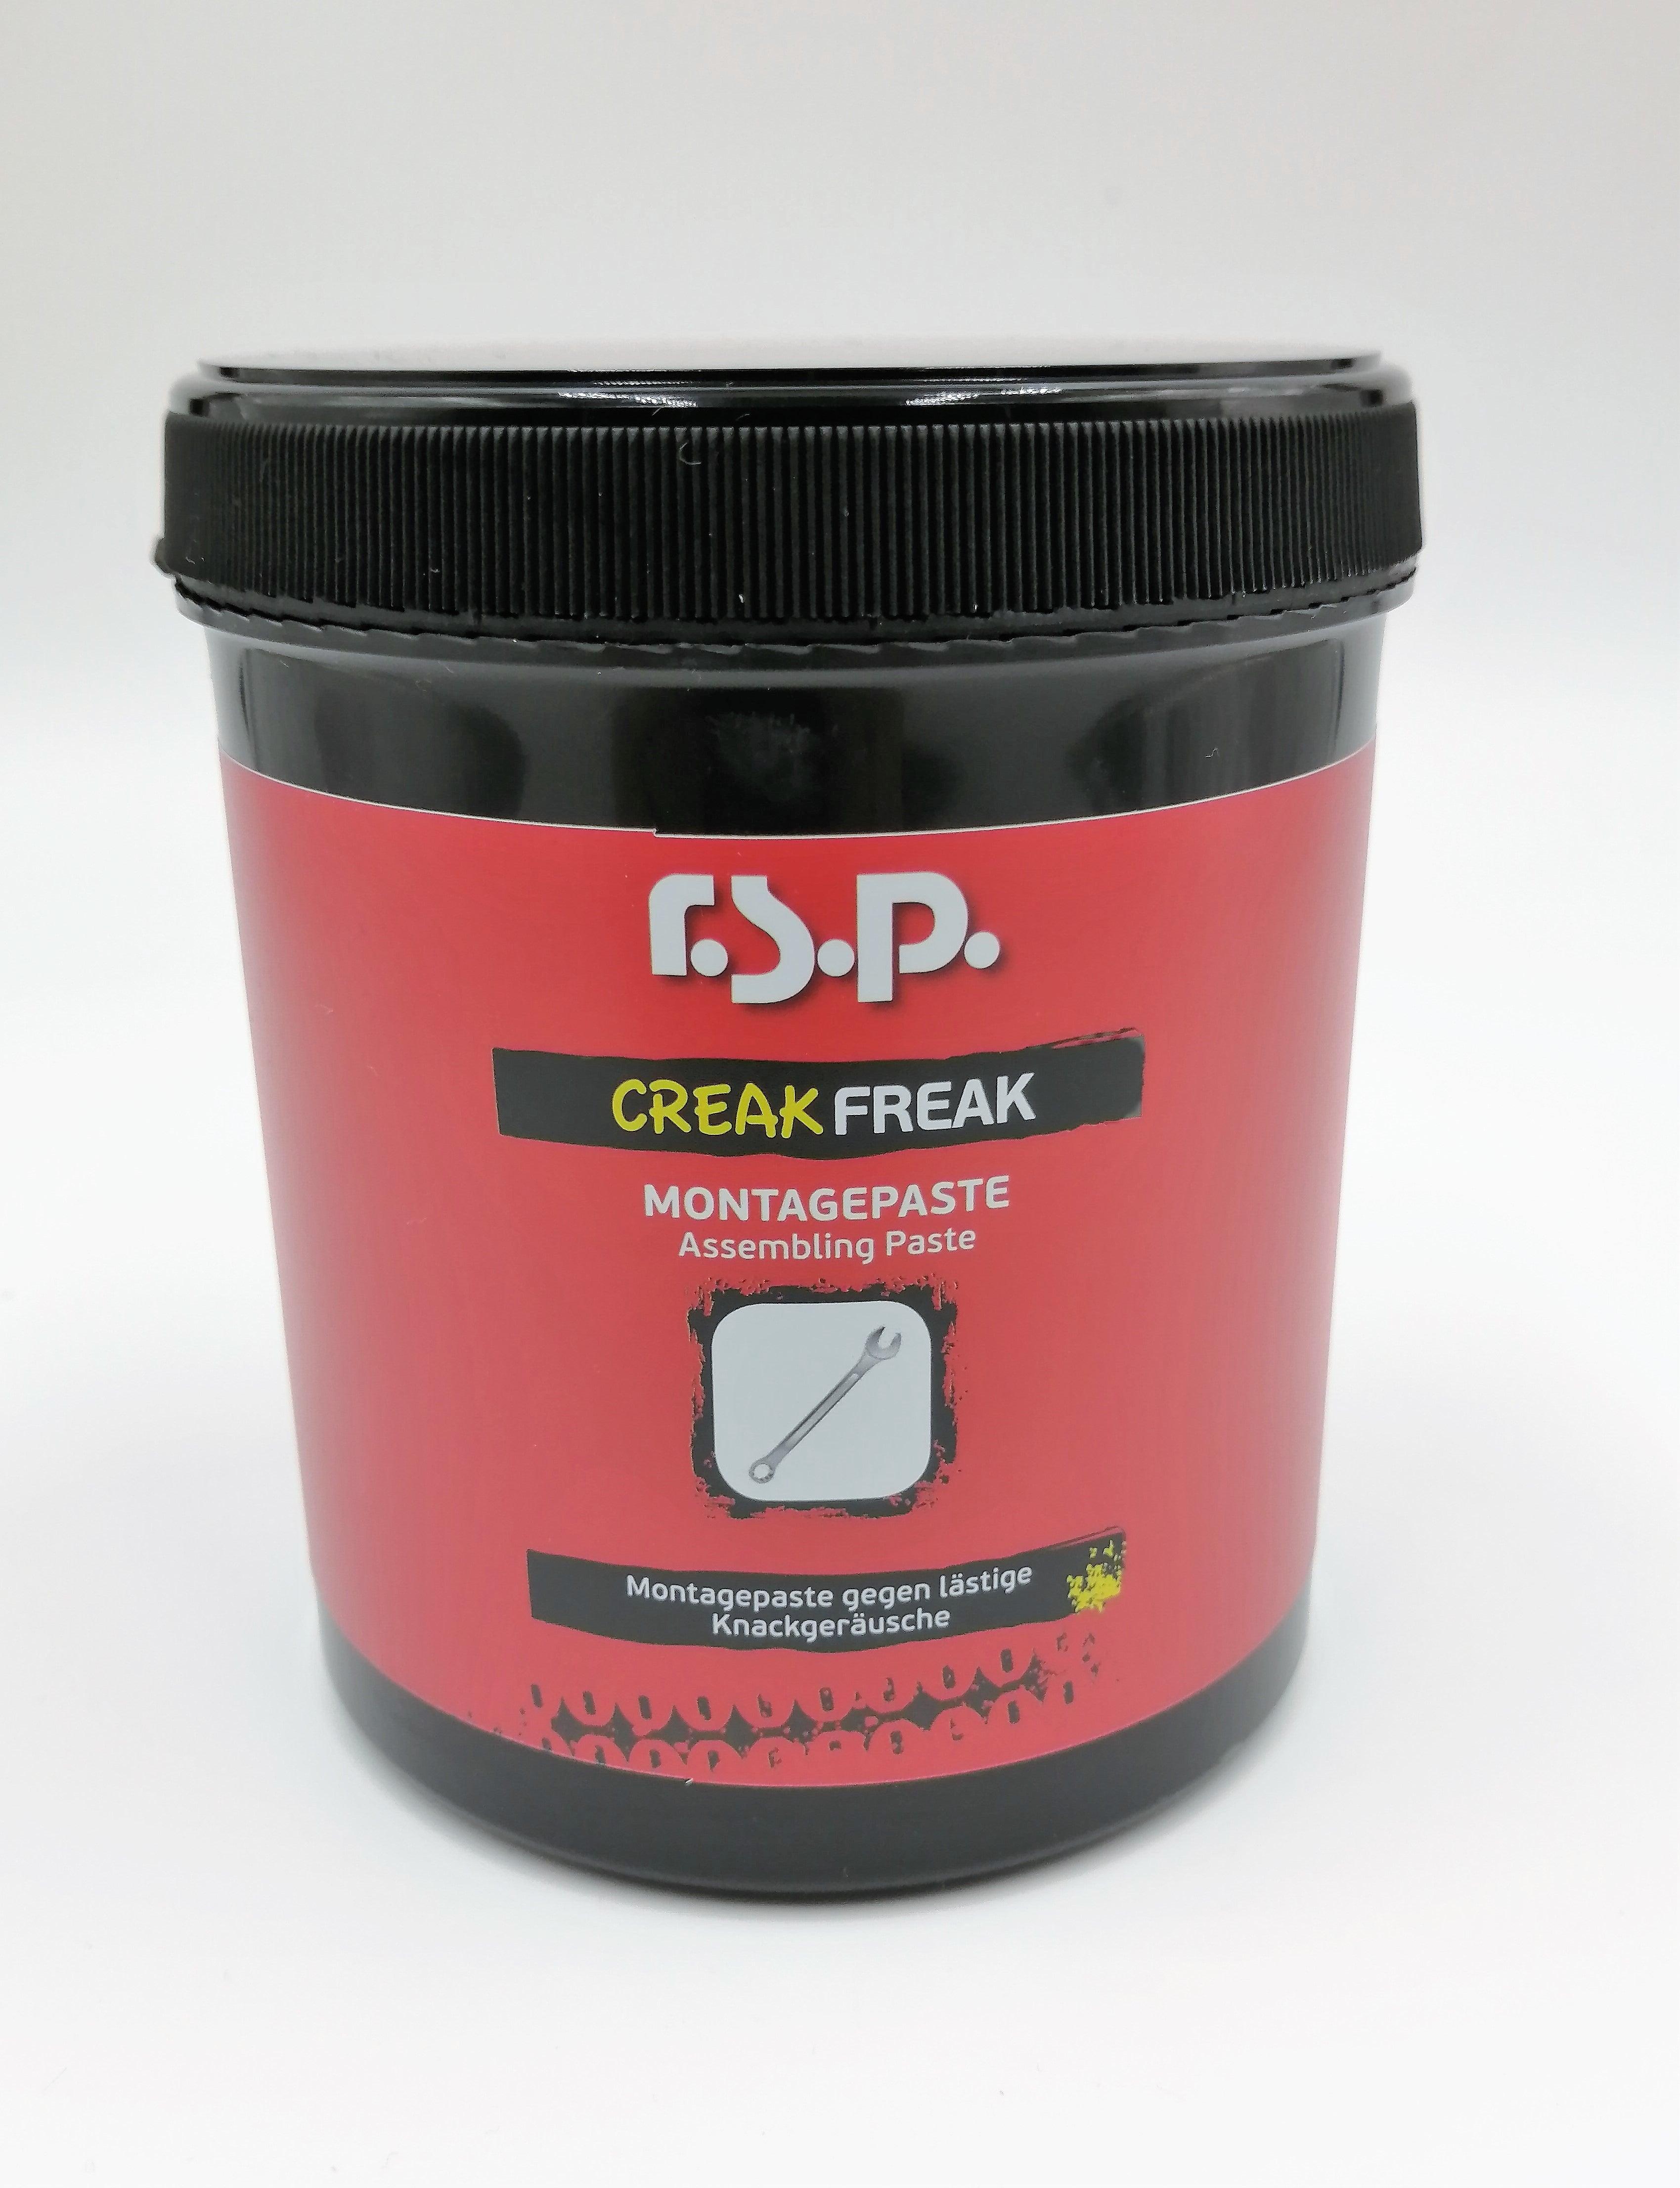 r.s.p. Creak Freak (assembling paste) - GAMUX